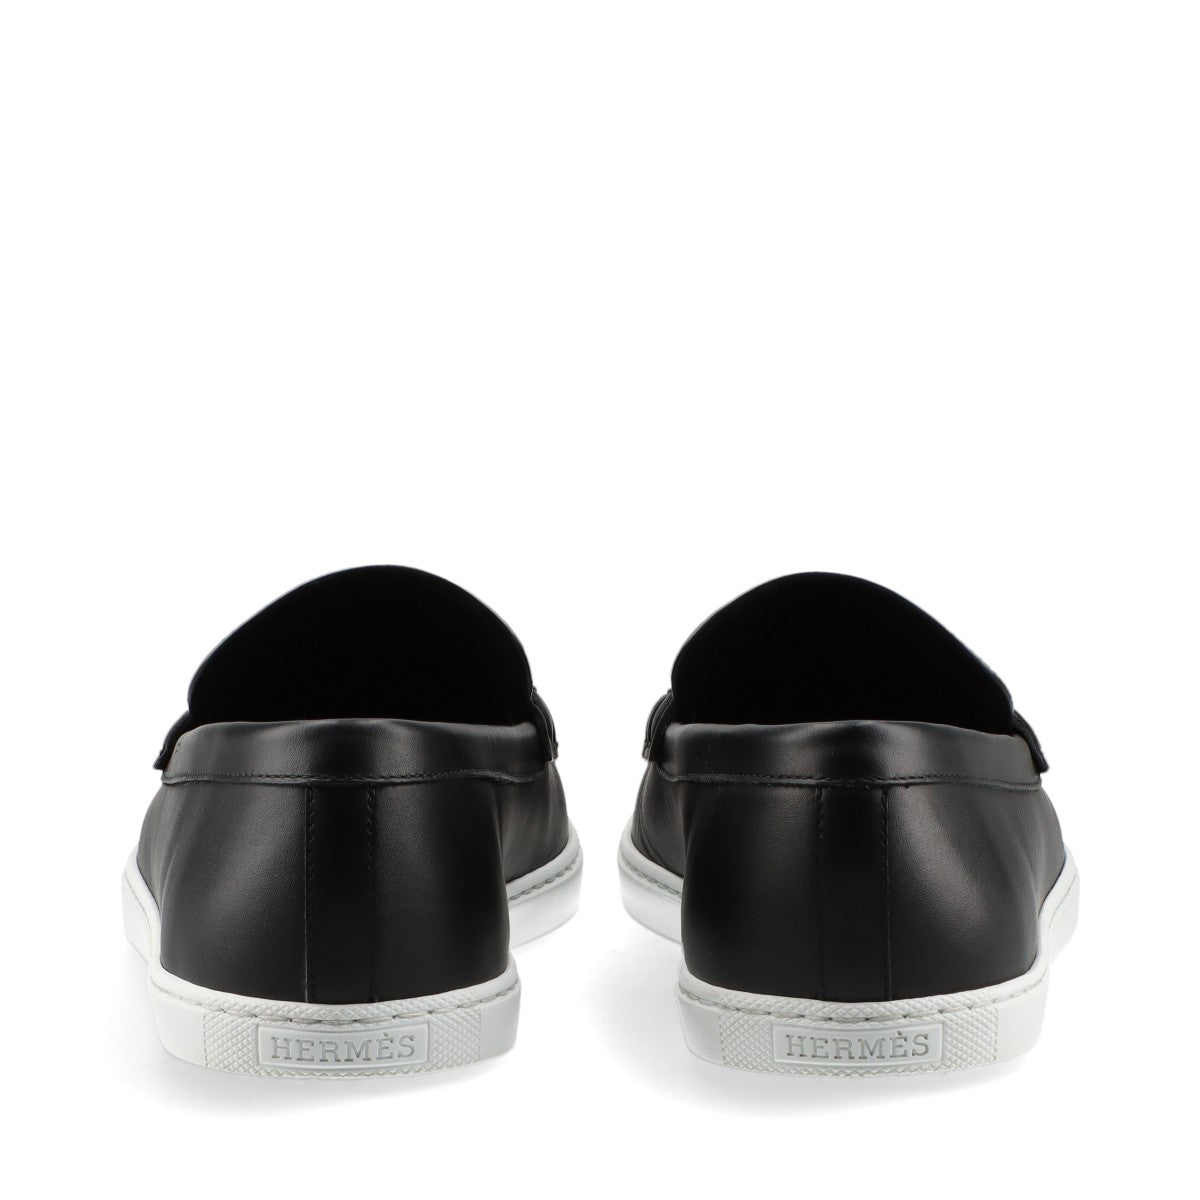 Hermès Ignacio Leather Slip-on 40 Men's Black Chaîne d'Ancre Moccasin